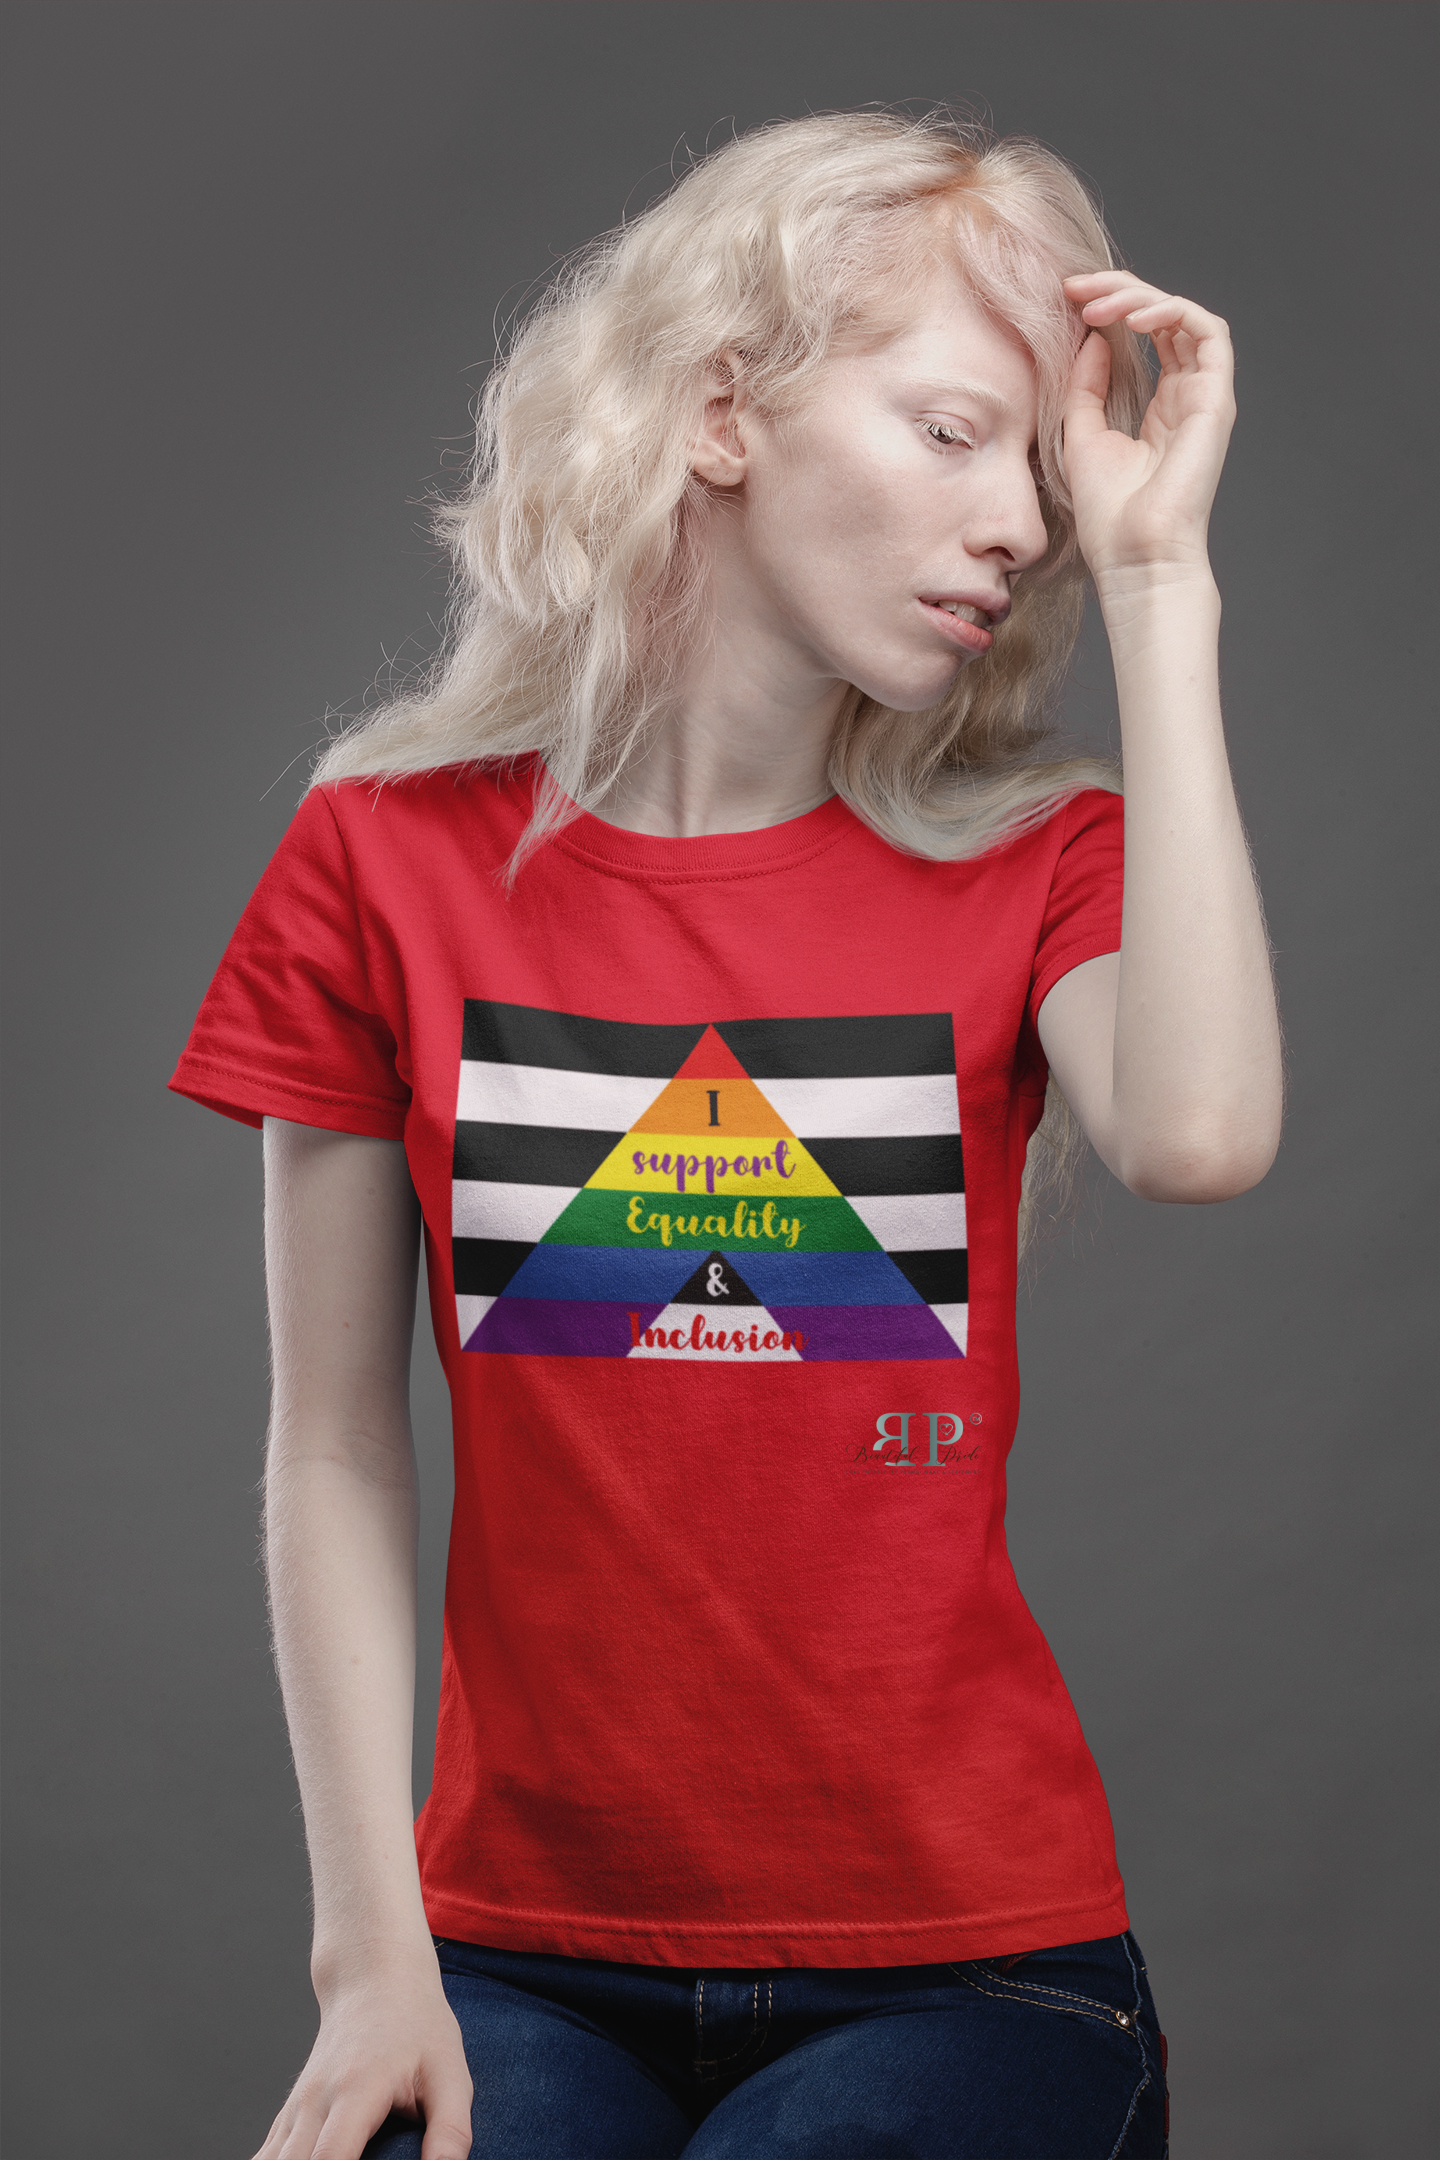 LGBTQIA + Ally: I Support Equality Short-Sleeve Unisex T-Shirt